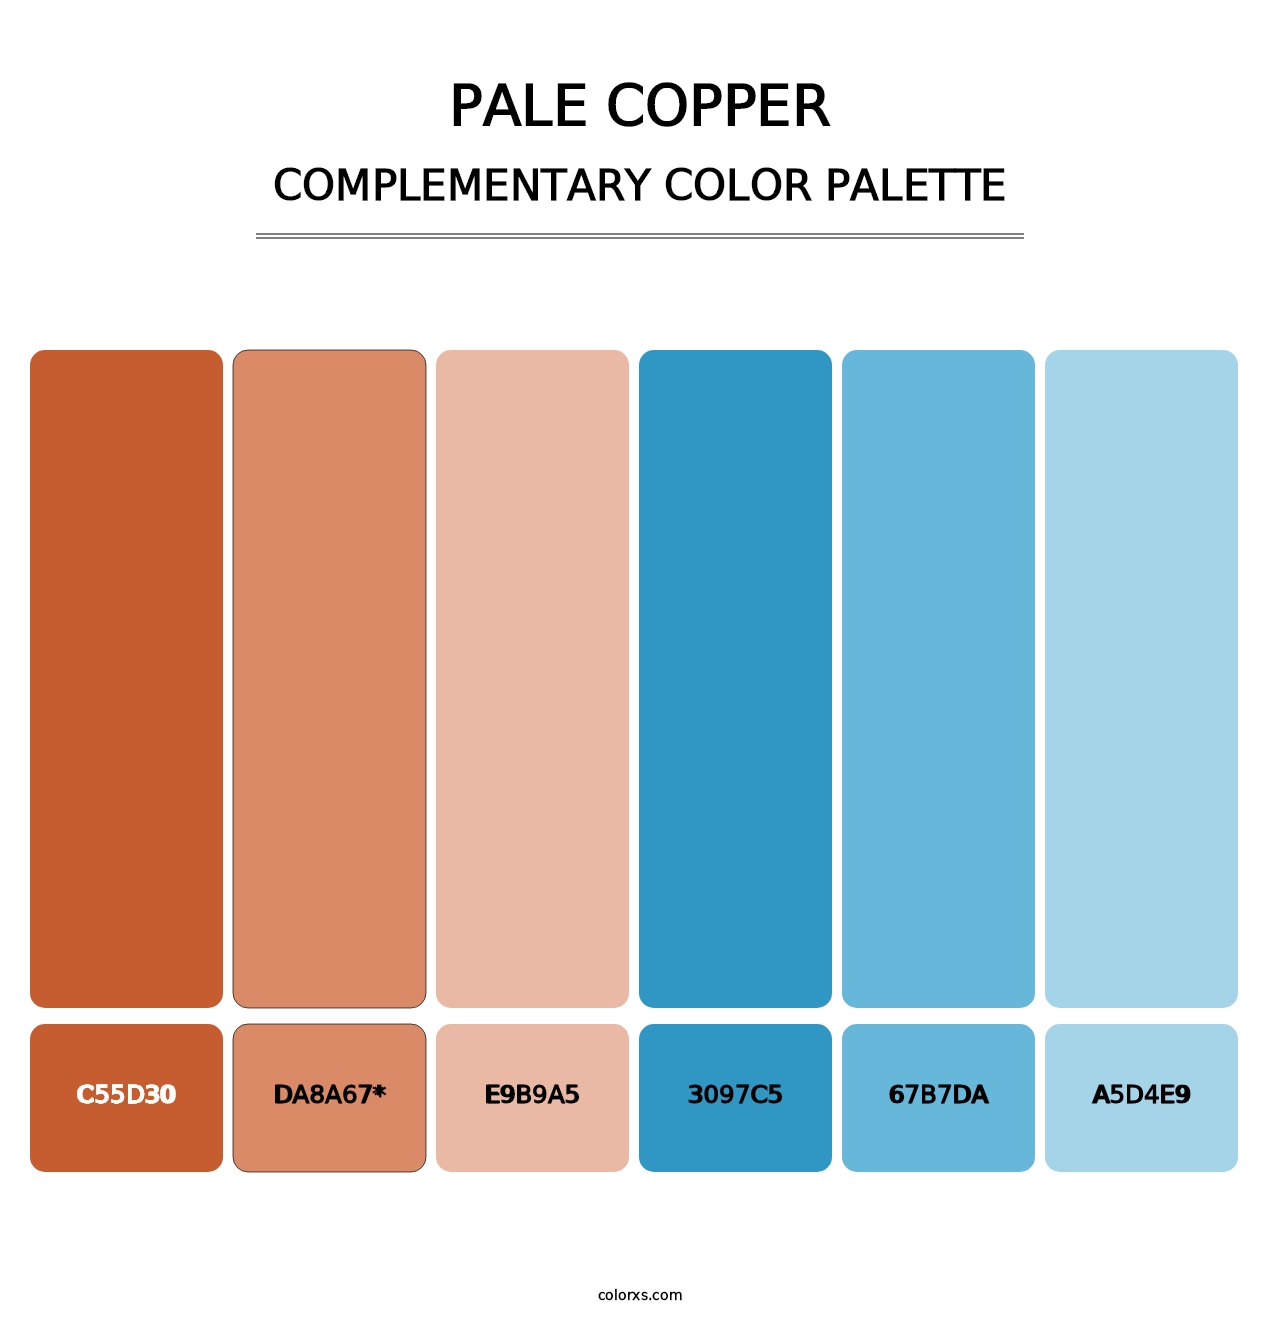 Pale Copper - Complementary Color Palette